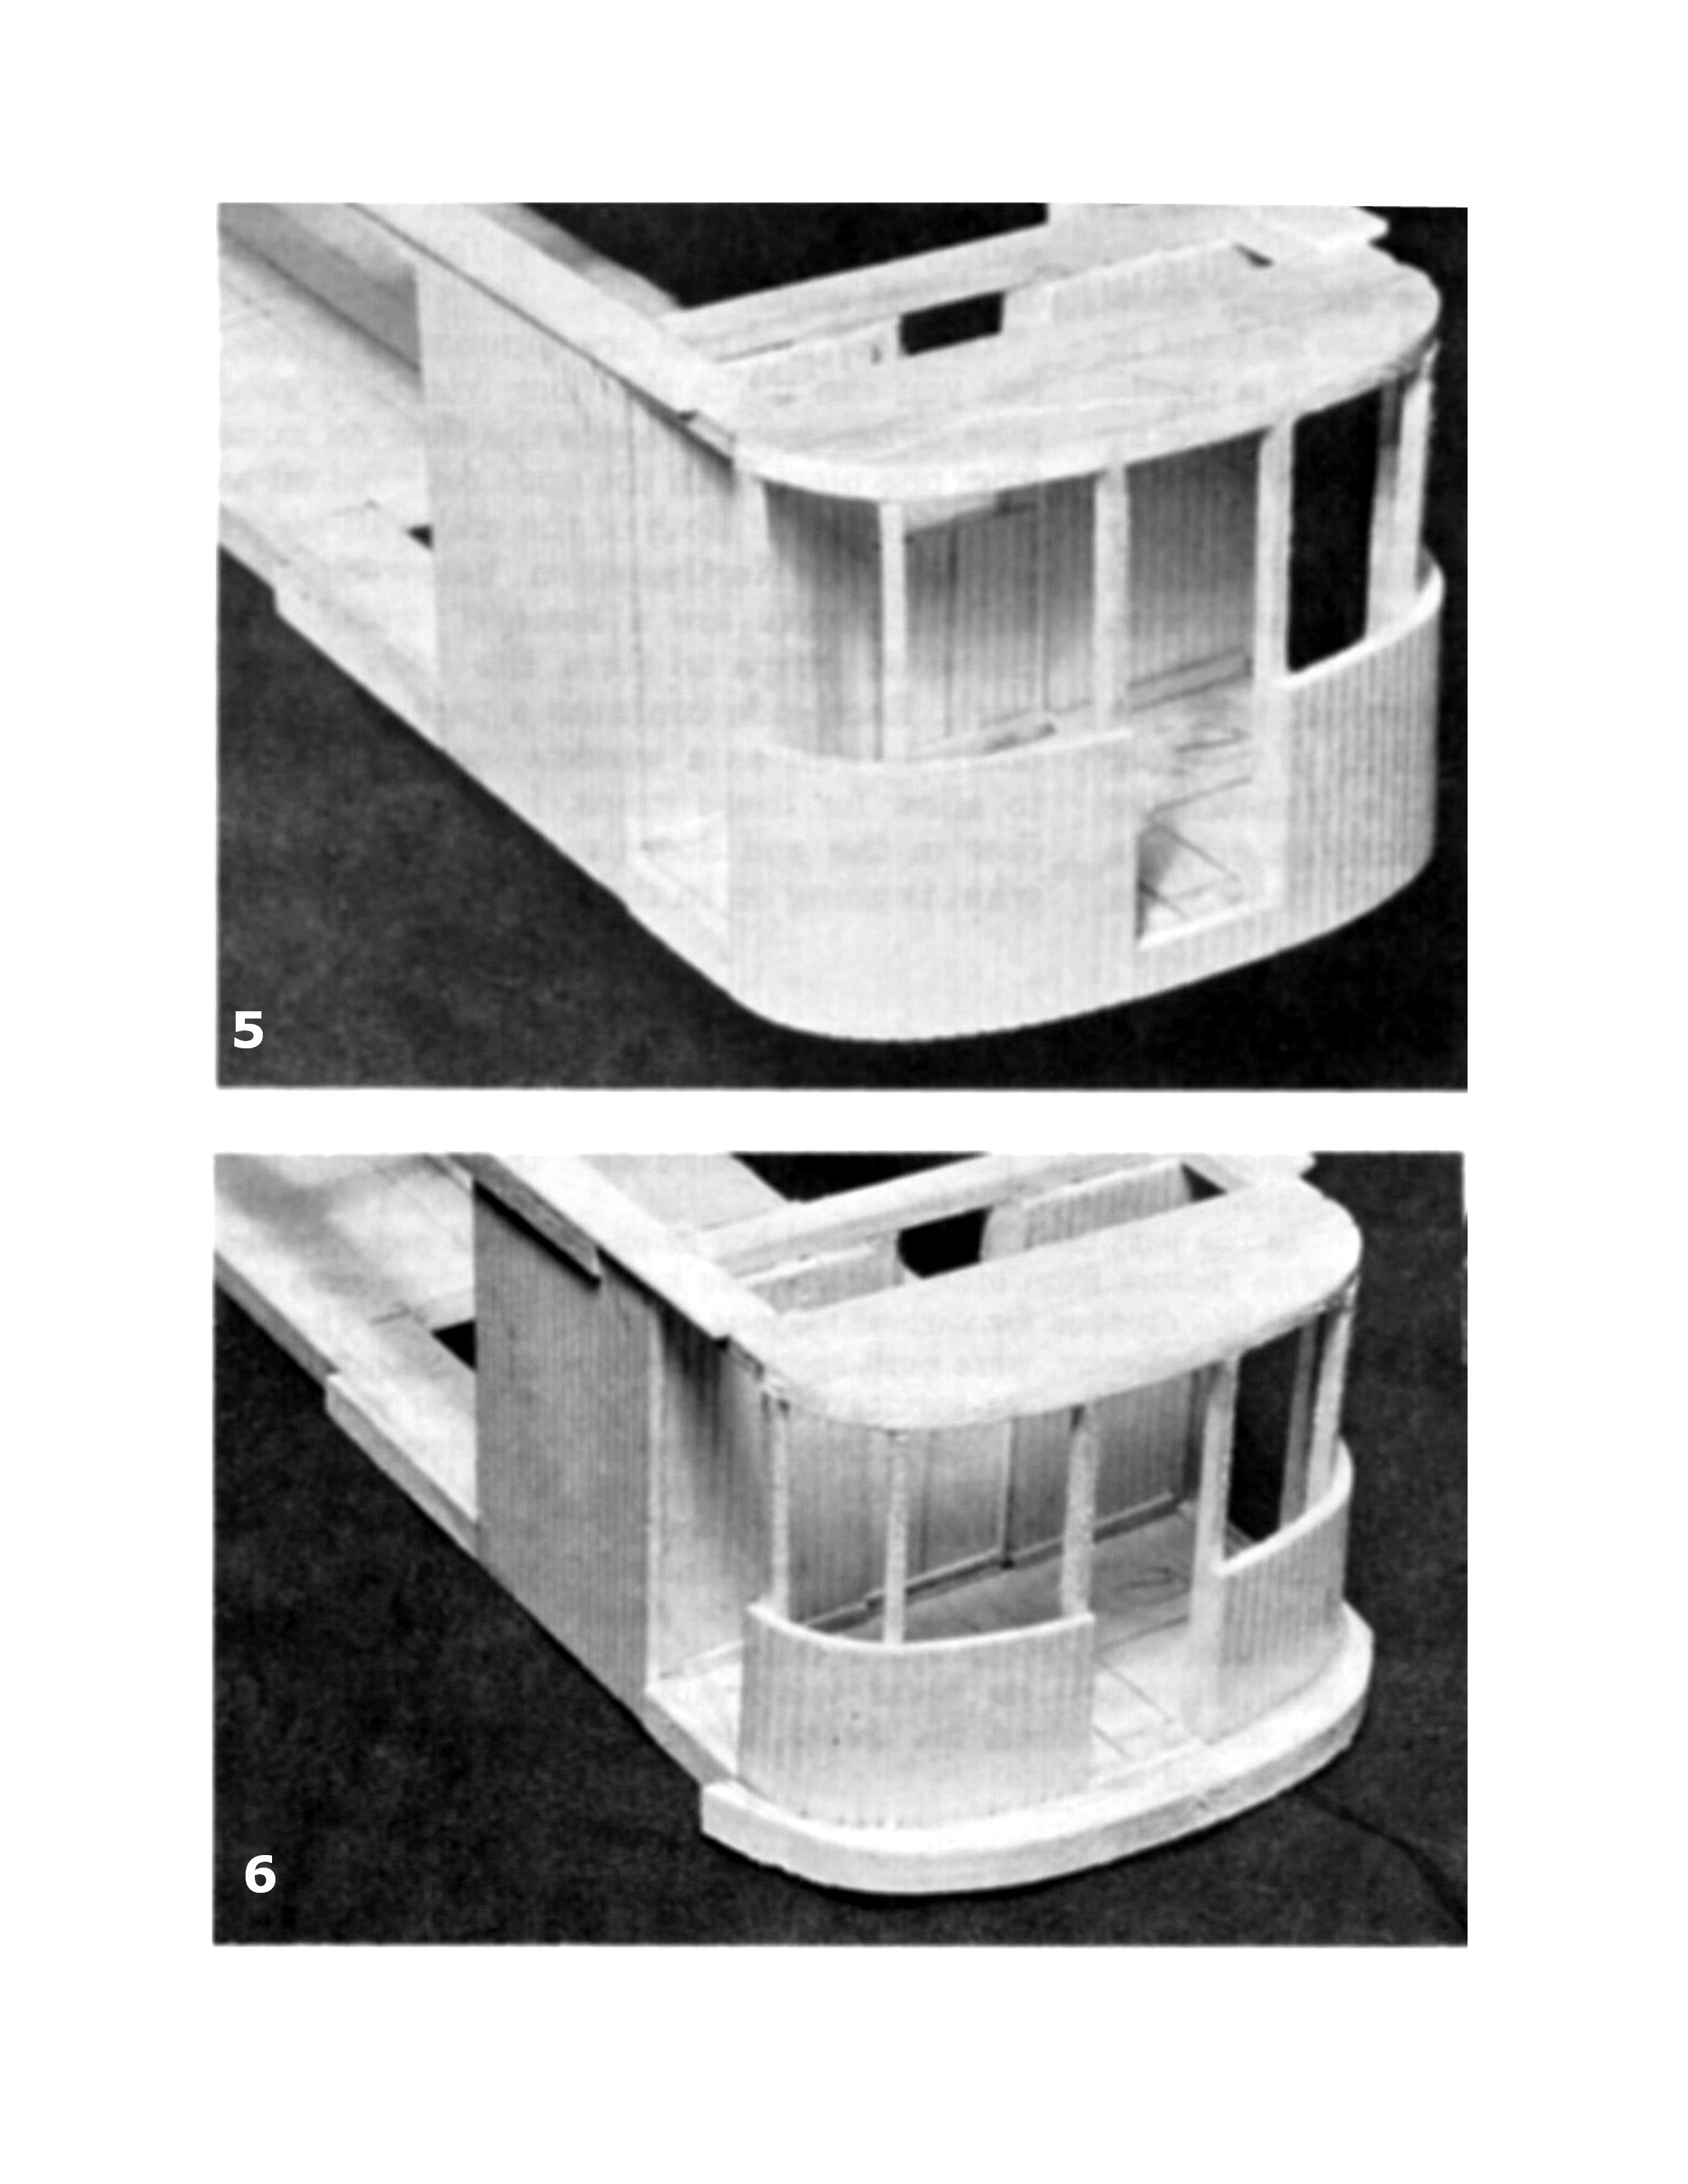 full size printed plan 'o' gauge box motor express car build an all-wood-trolley